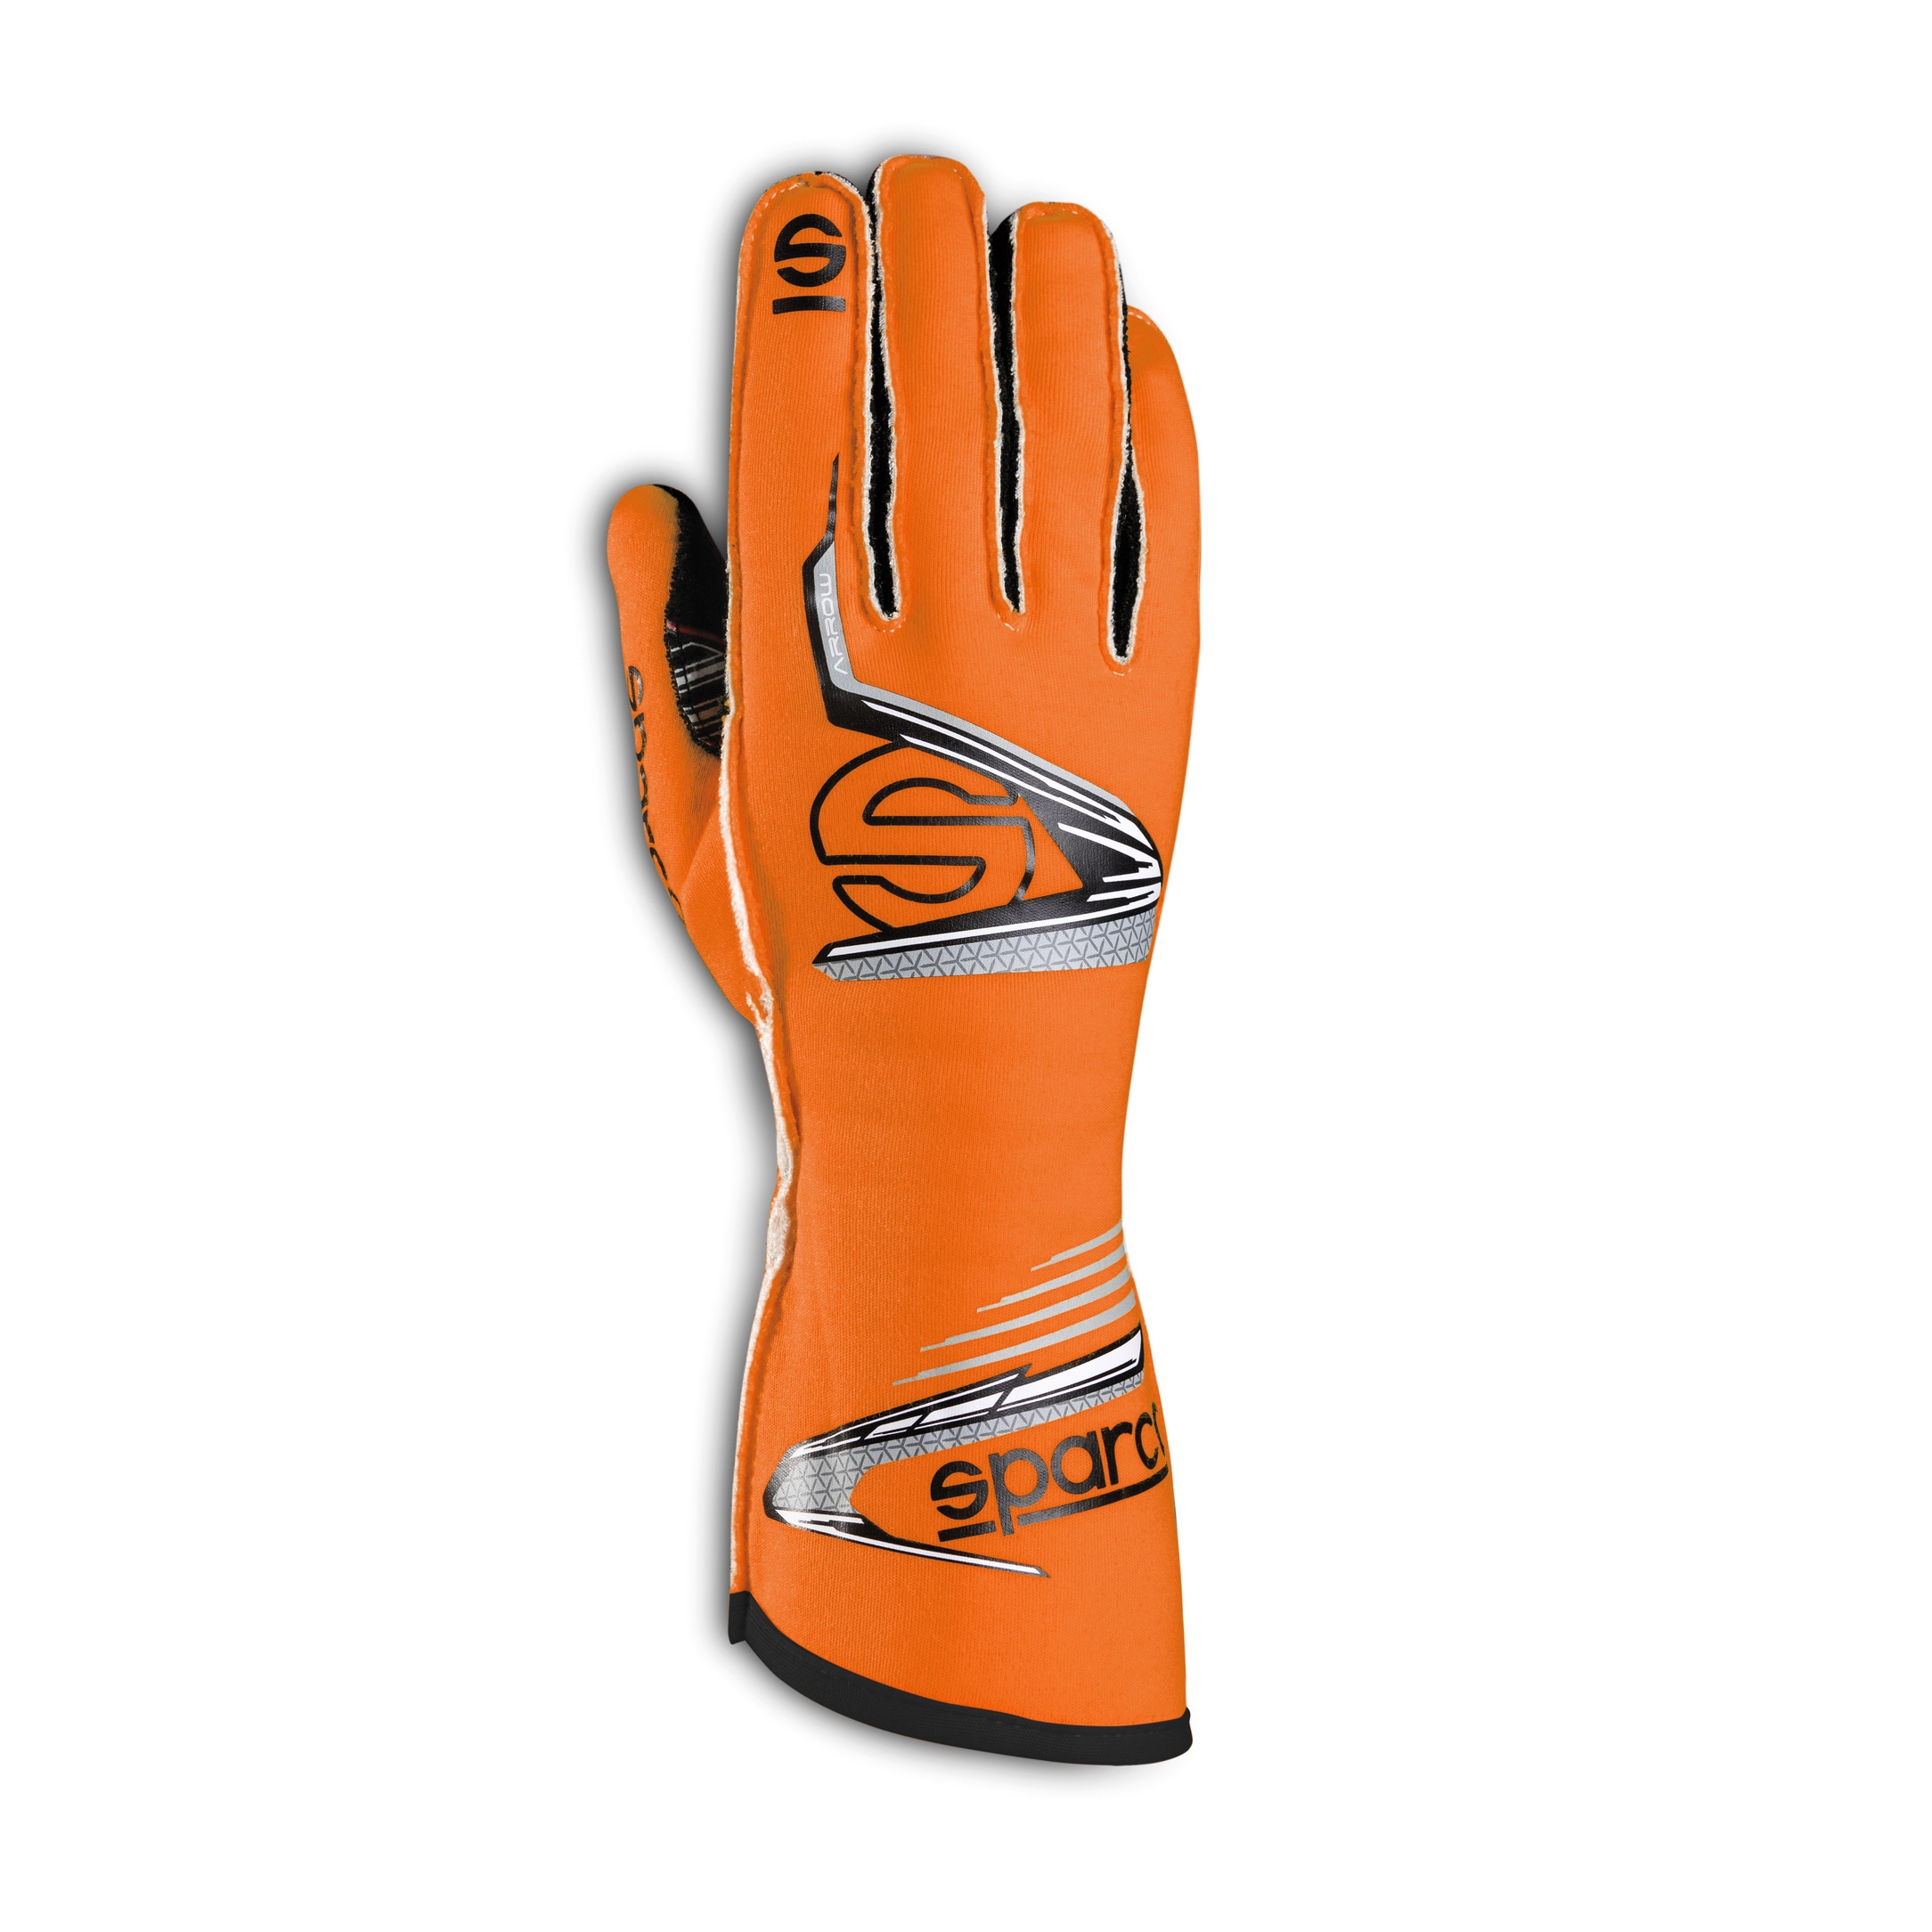 Gloves Sparco Arrow RG-7.1 Black/Orange, Sparco